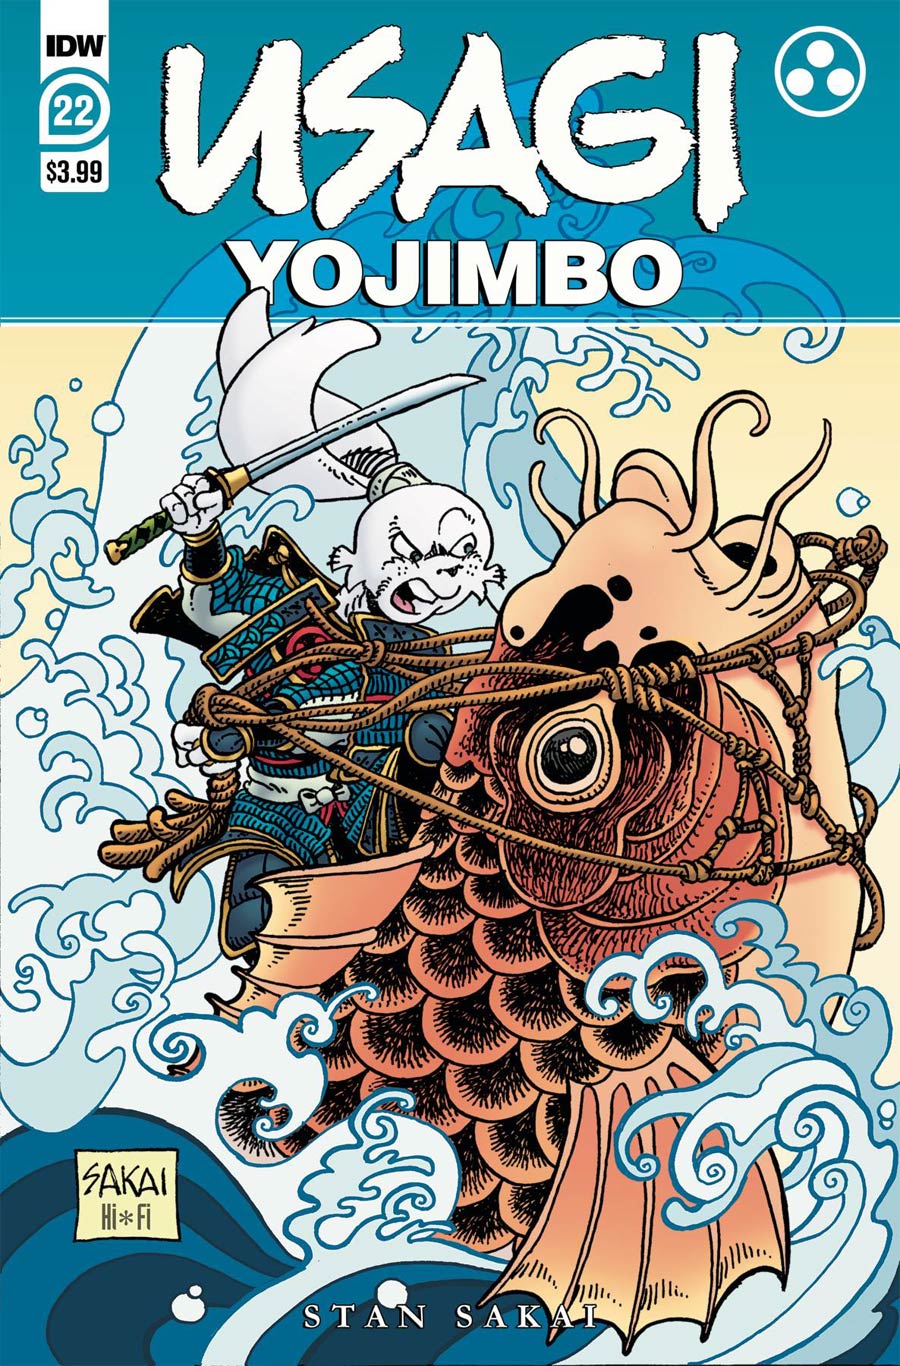 Usagi Yojimbo Vol 4 #22 Cover A Regular Stan Sakai Cover